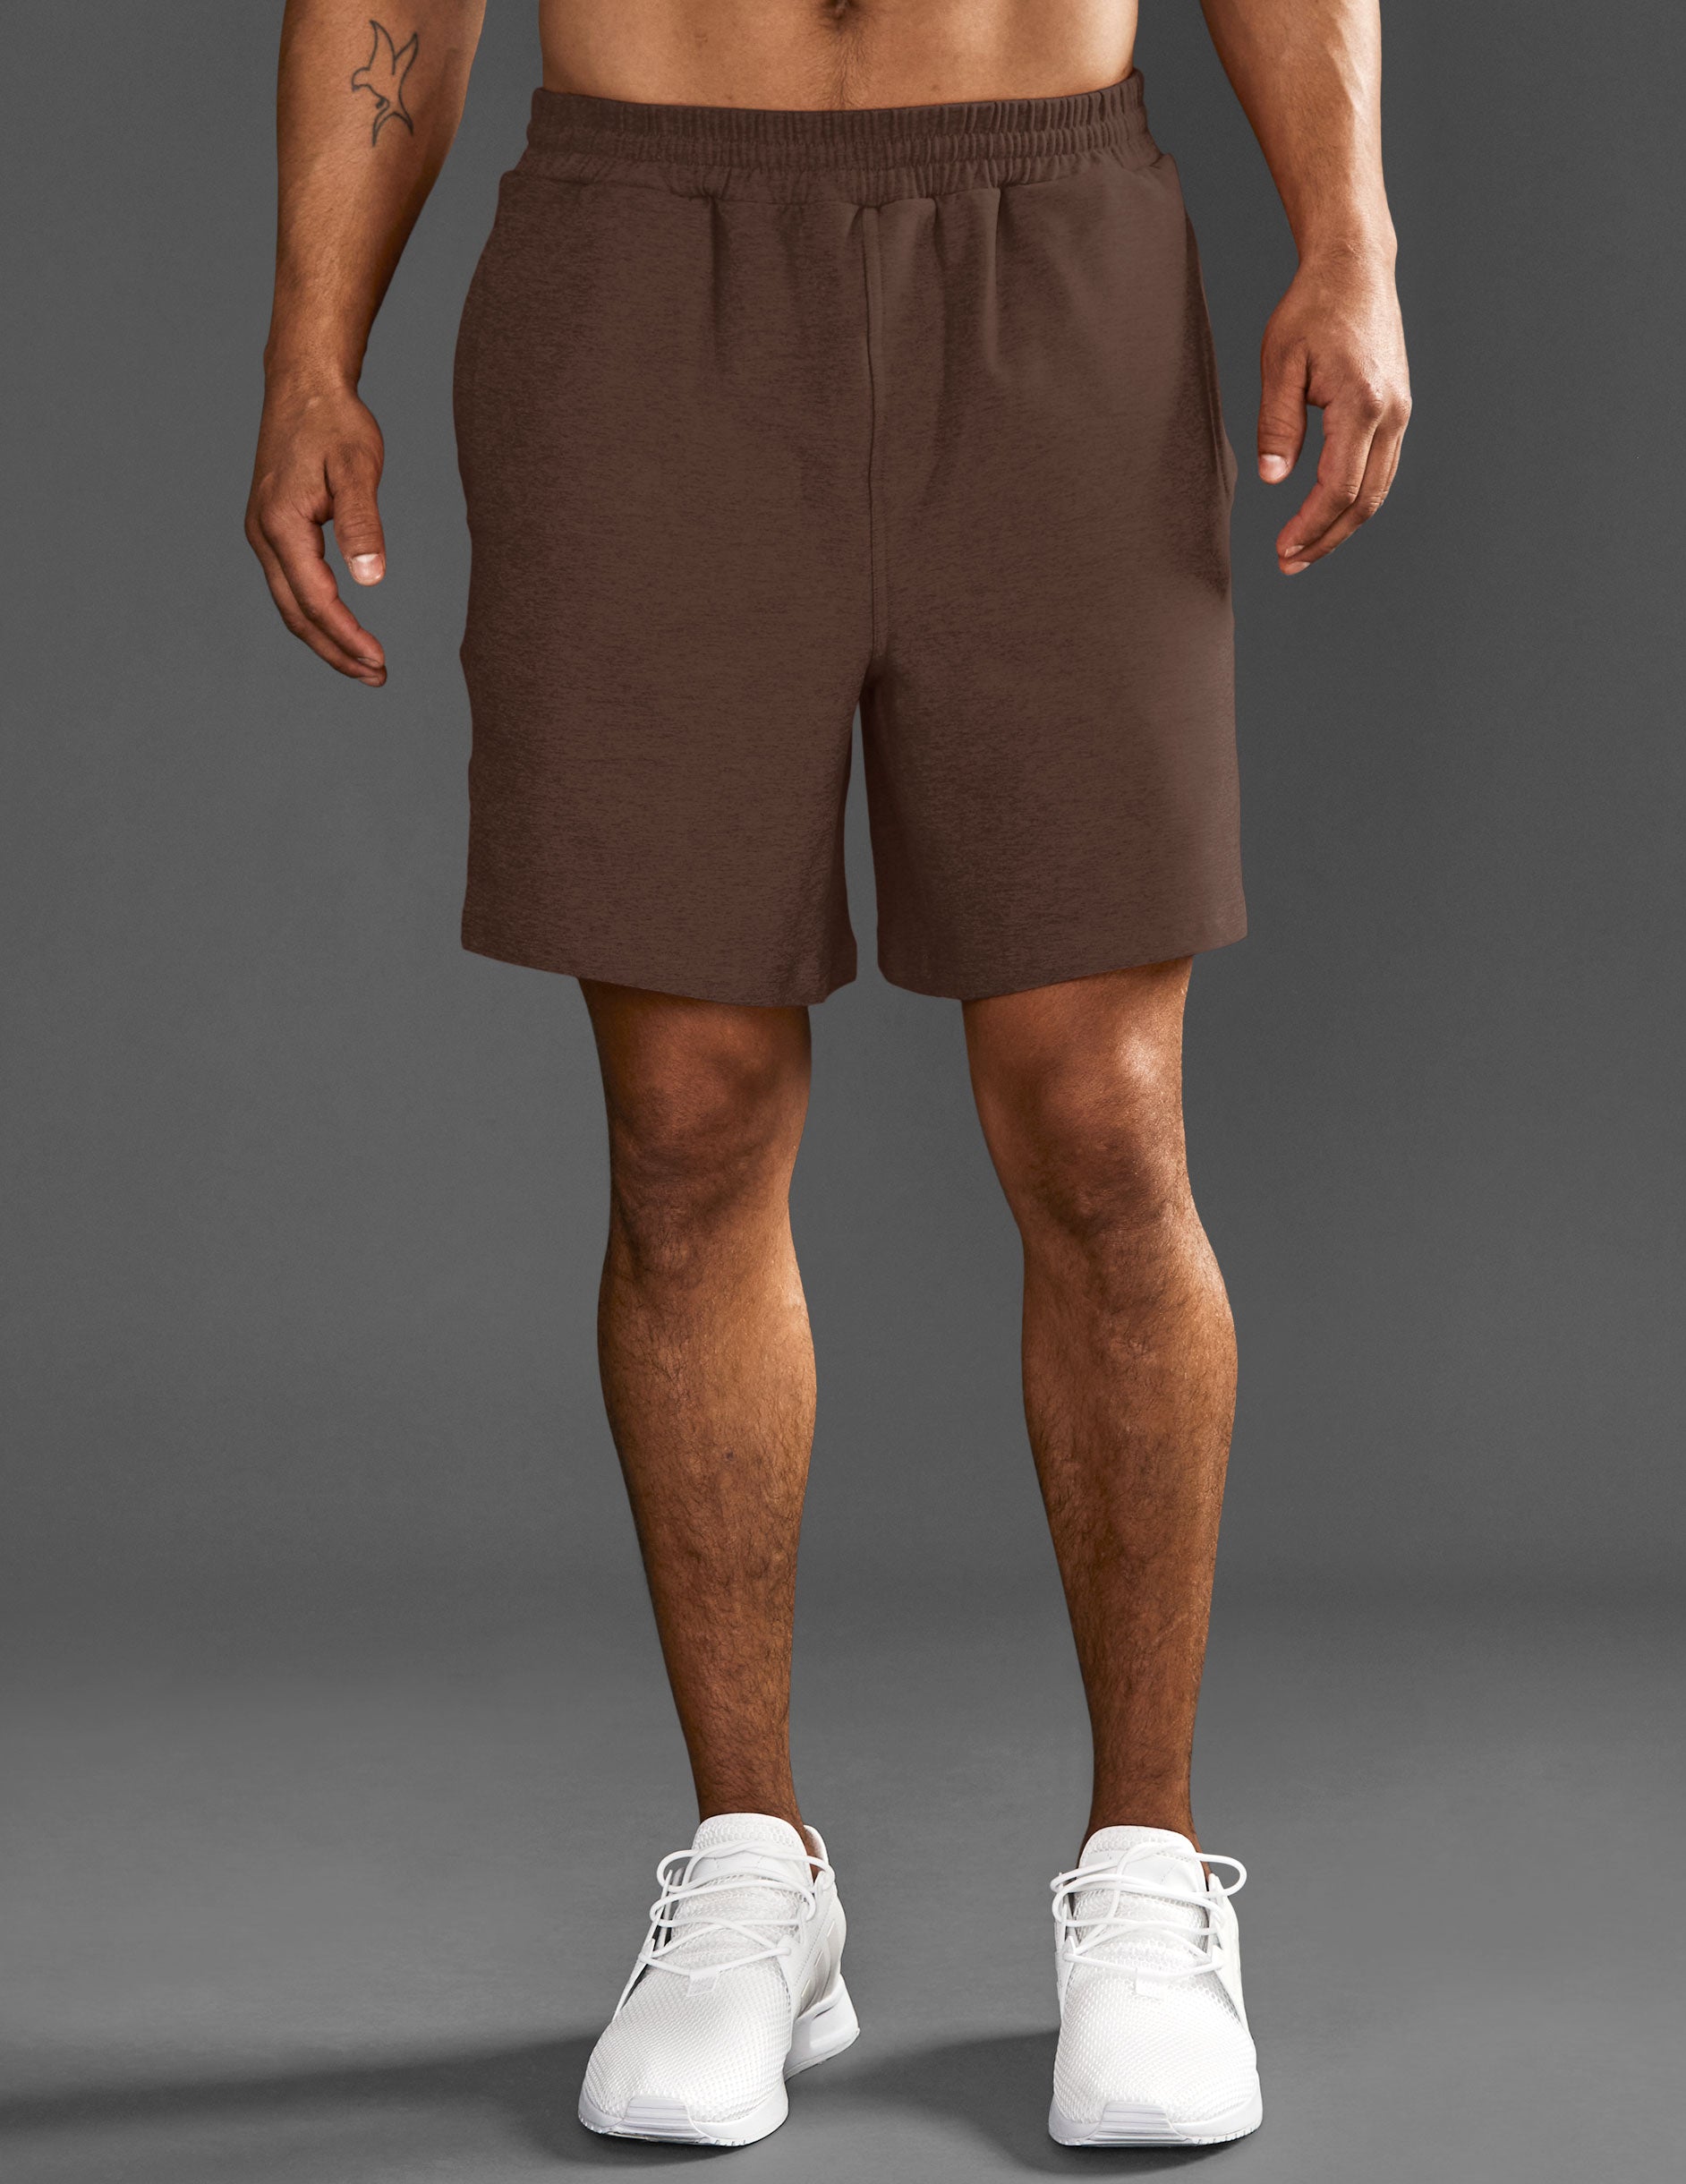 brown men's shorts. 